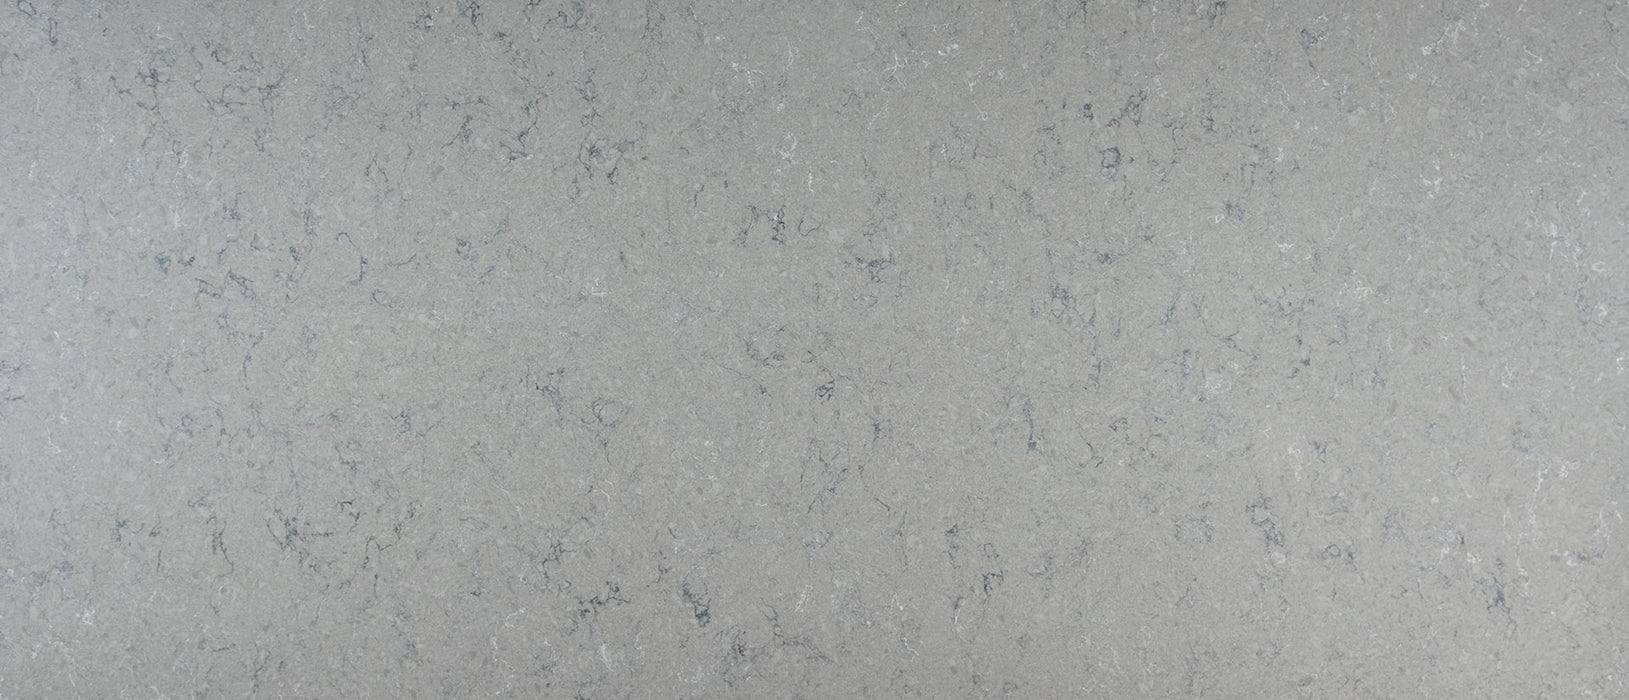 Fantasy Gray quartz countertop slab